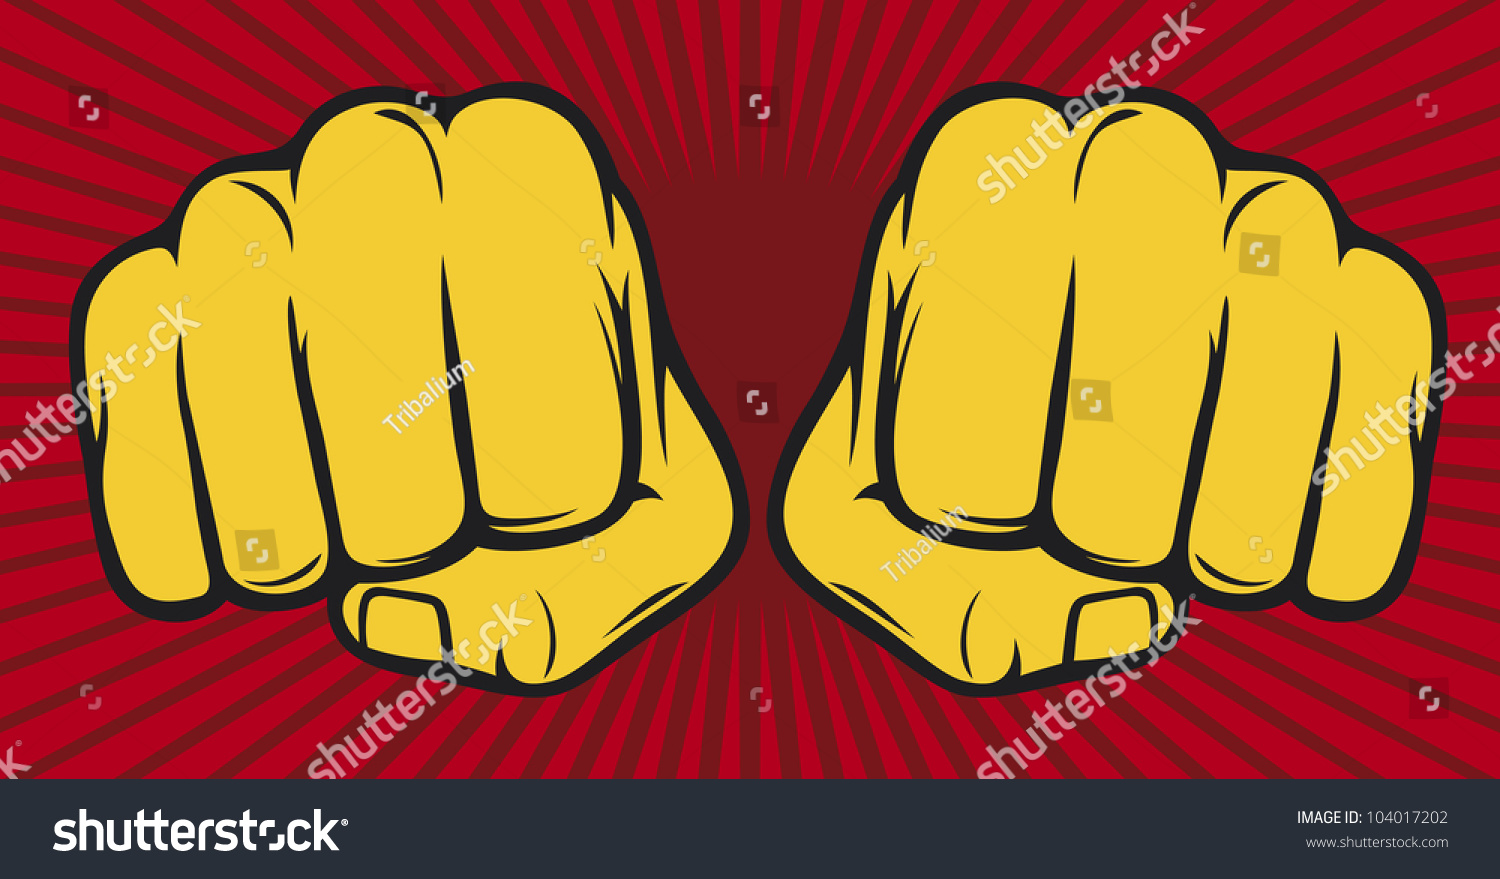 Two Fists Punching Stock Photo 104017202 Shutterstock